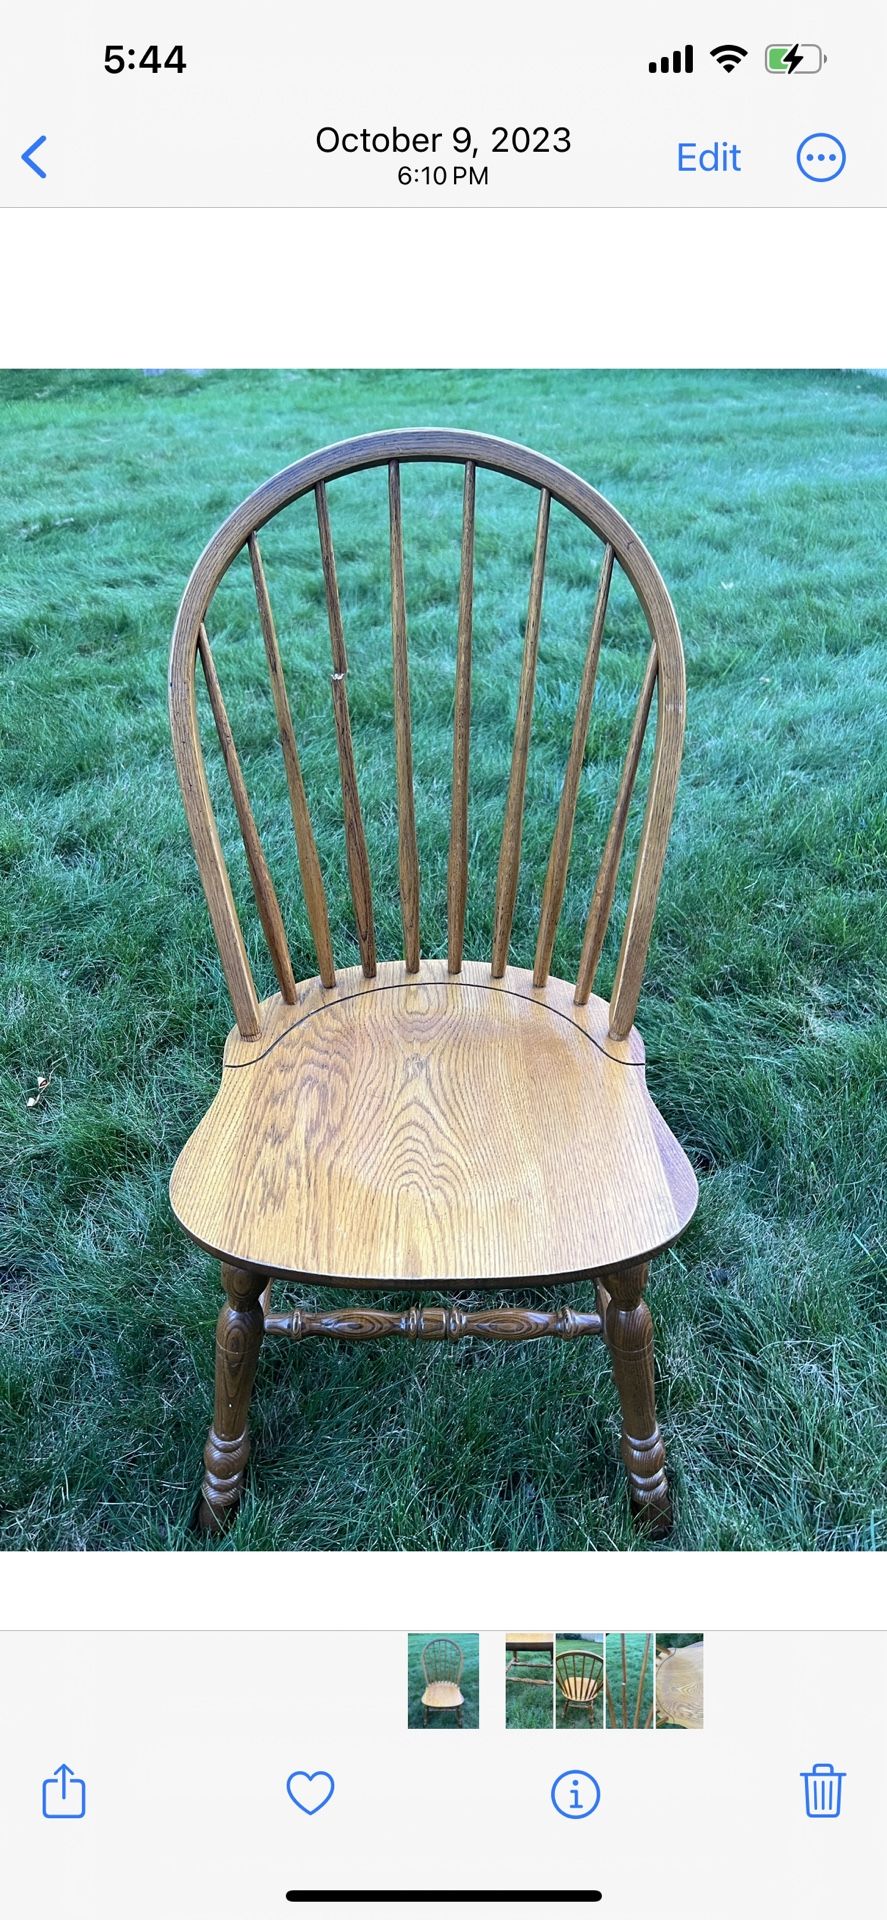 1 Antique Wooden Chair 